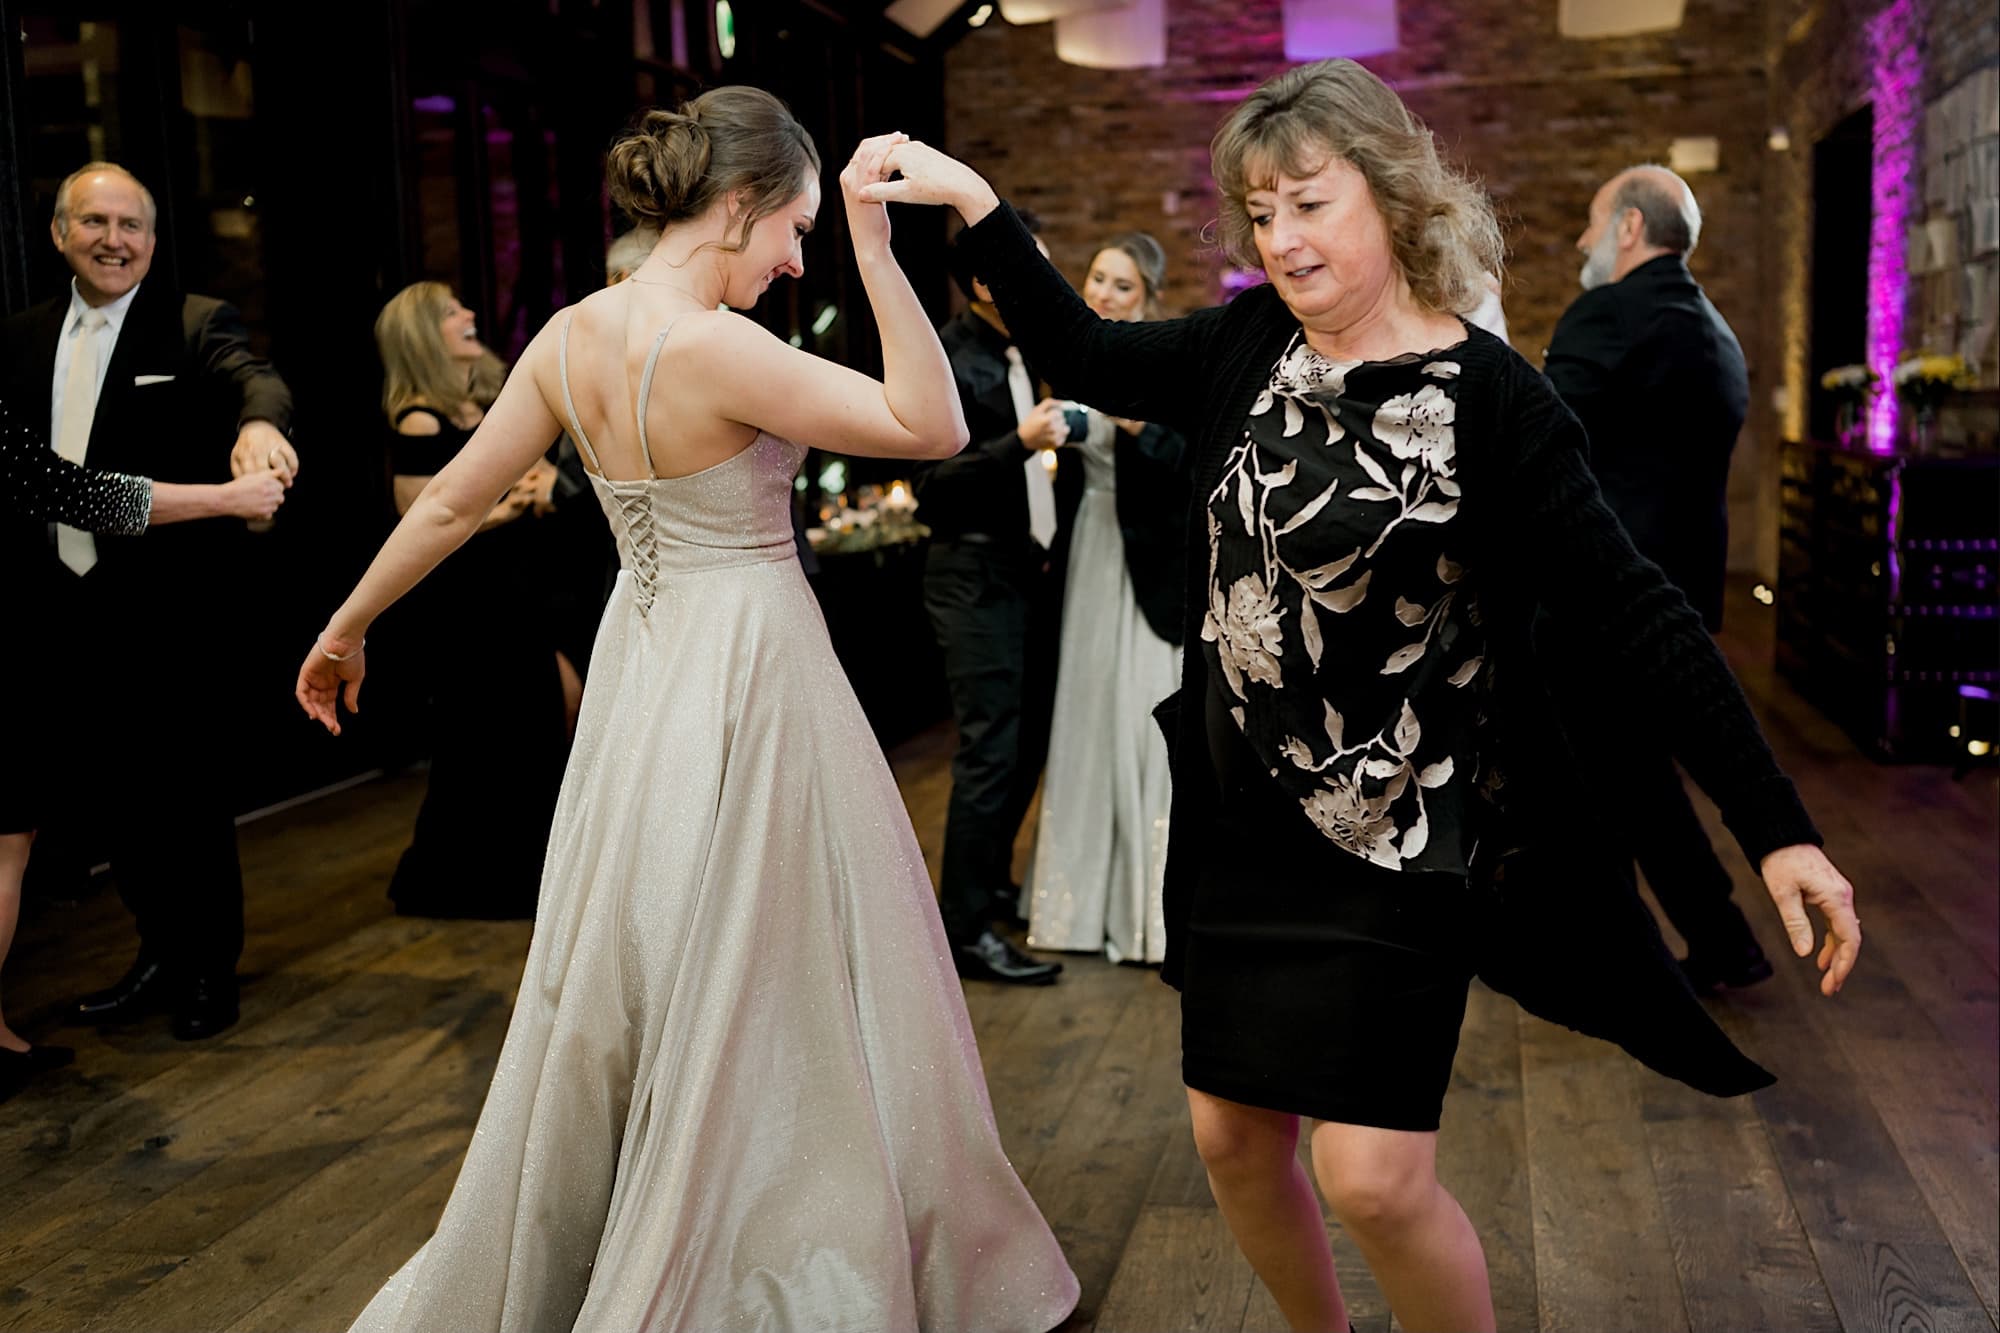 dancing photography des moines wedding reception